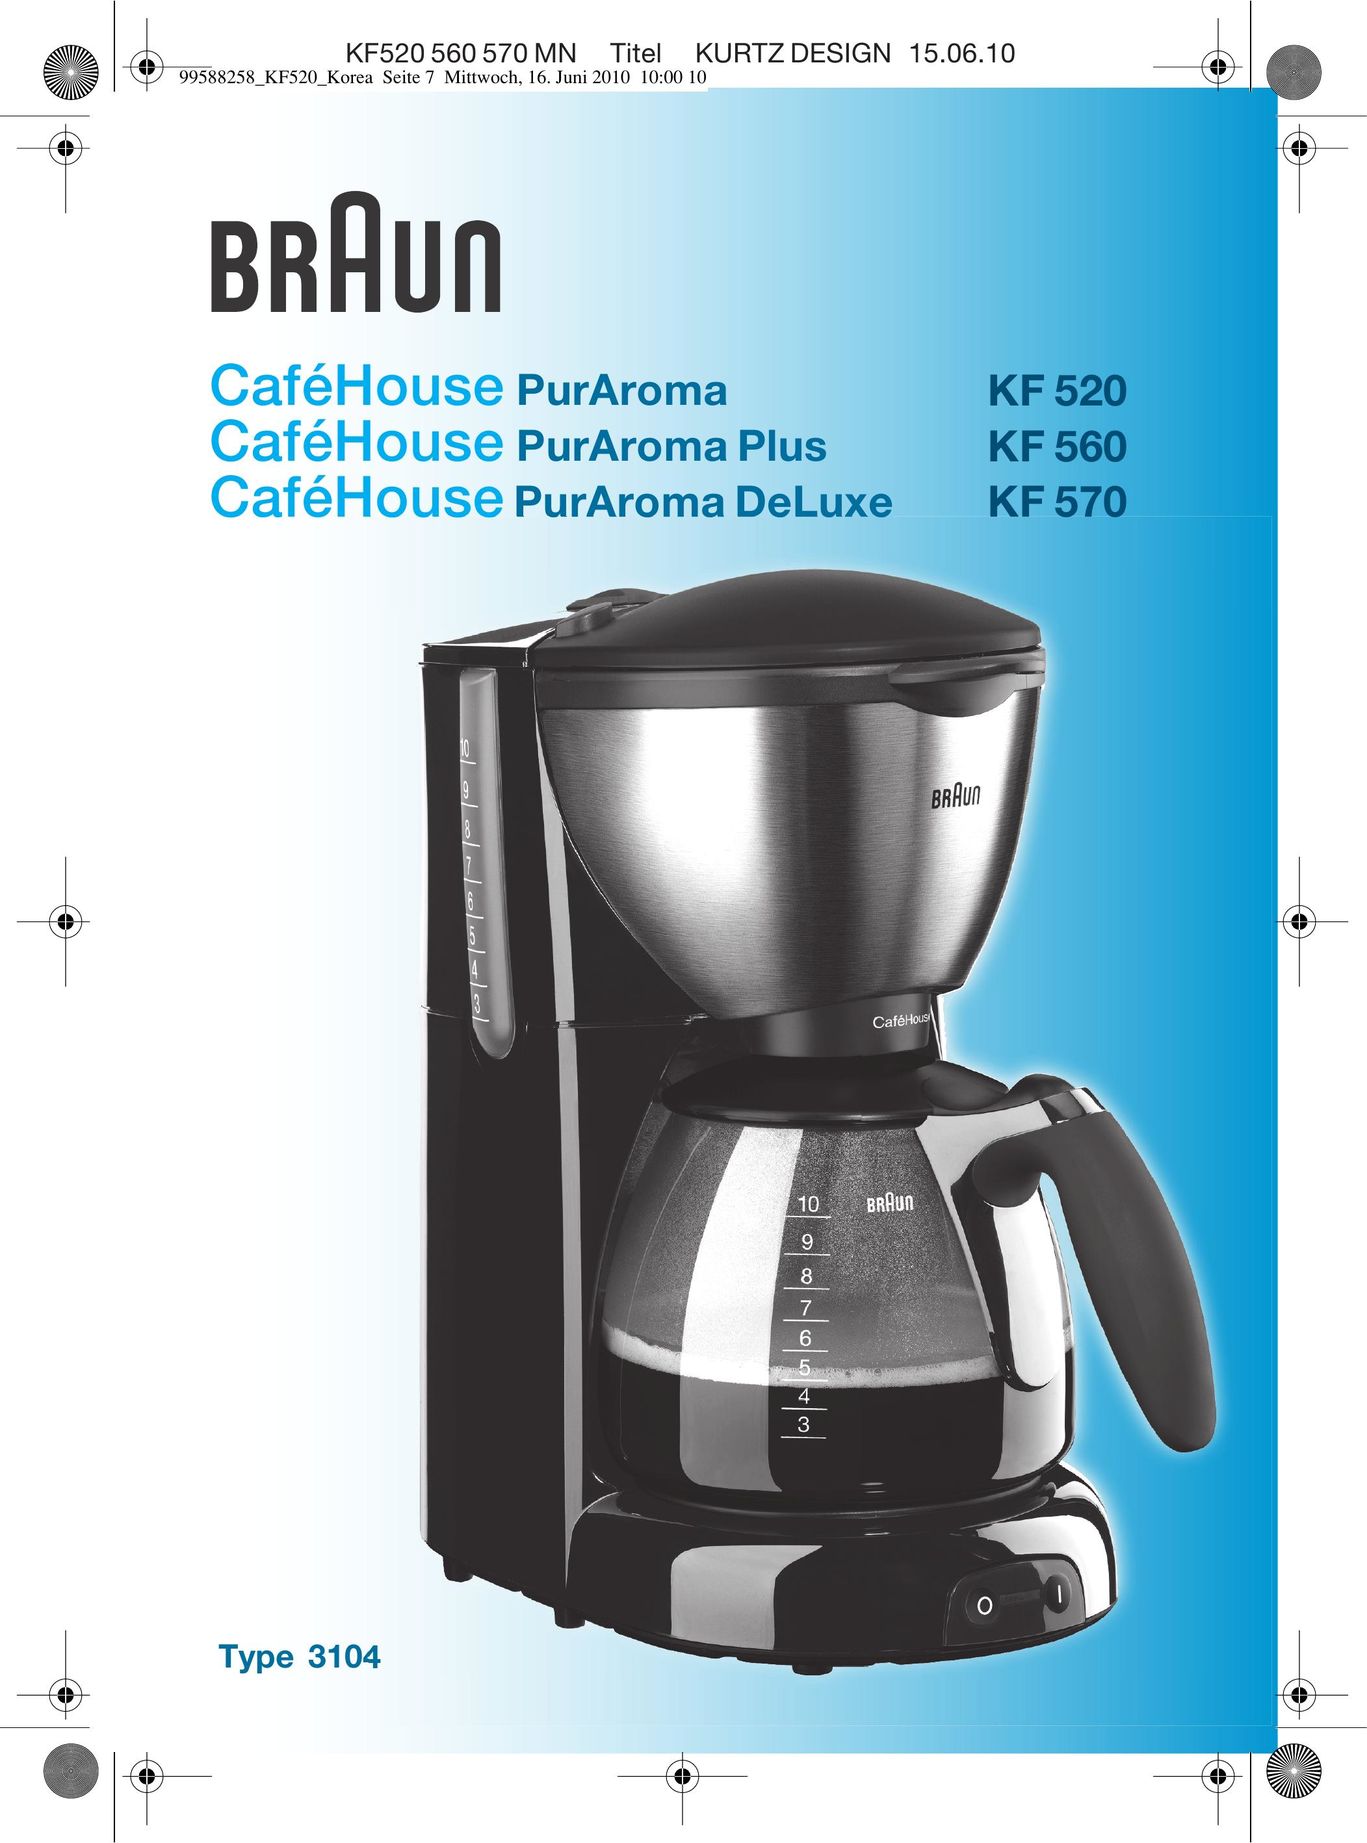 Braun KF 560 Coffeemaker User Manual